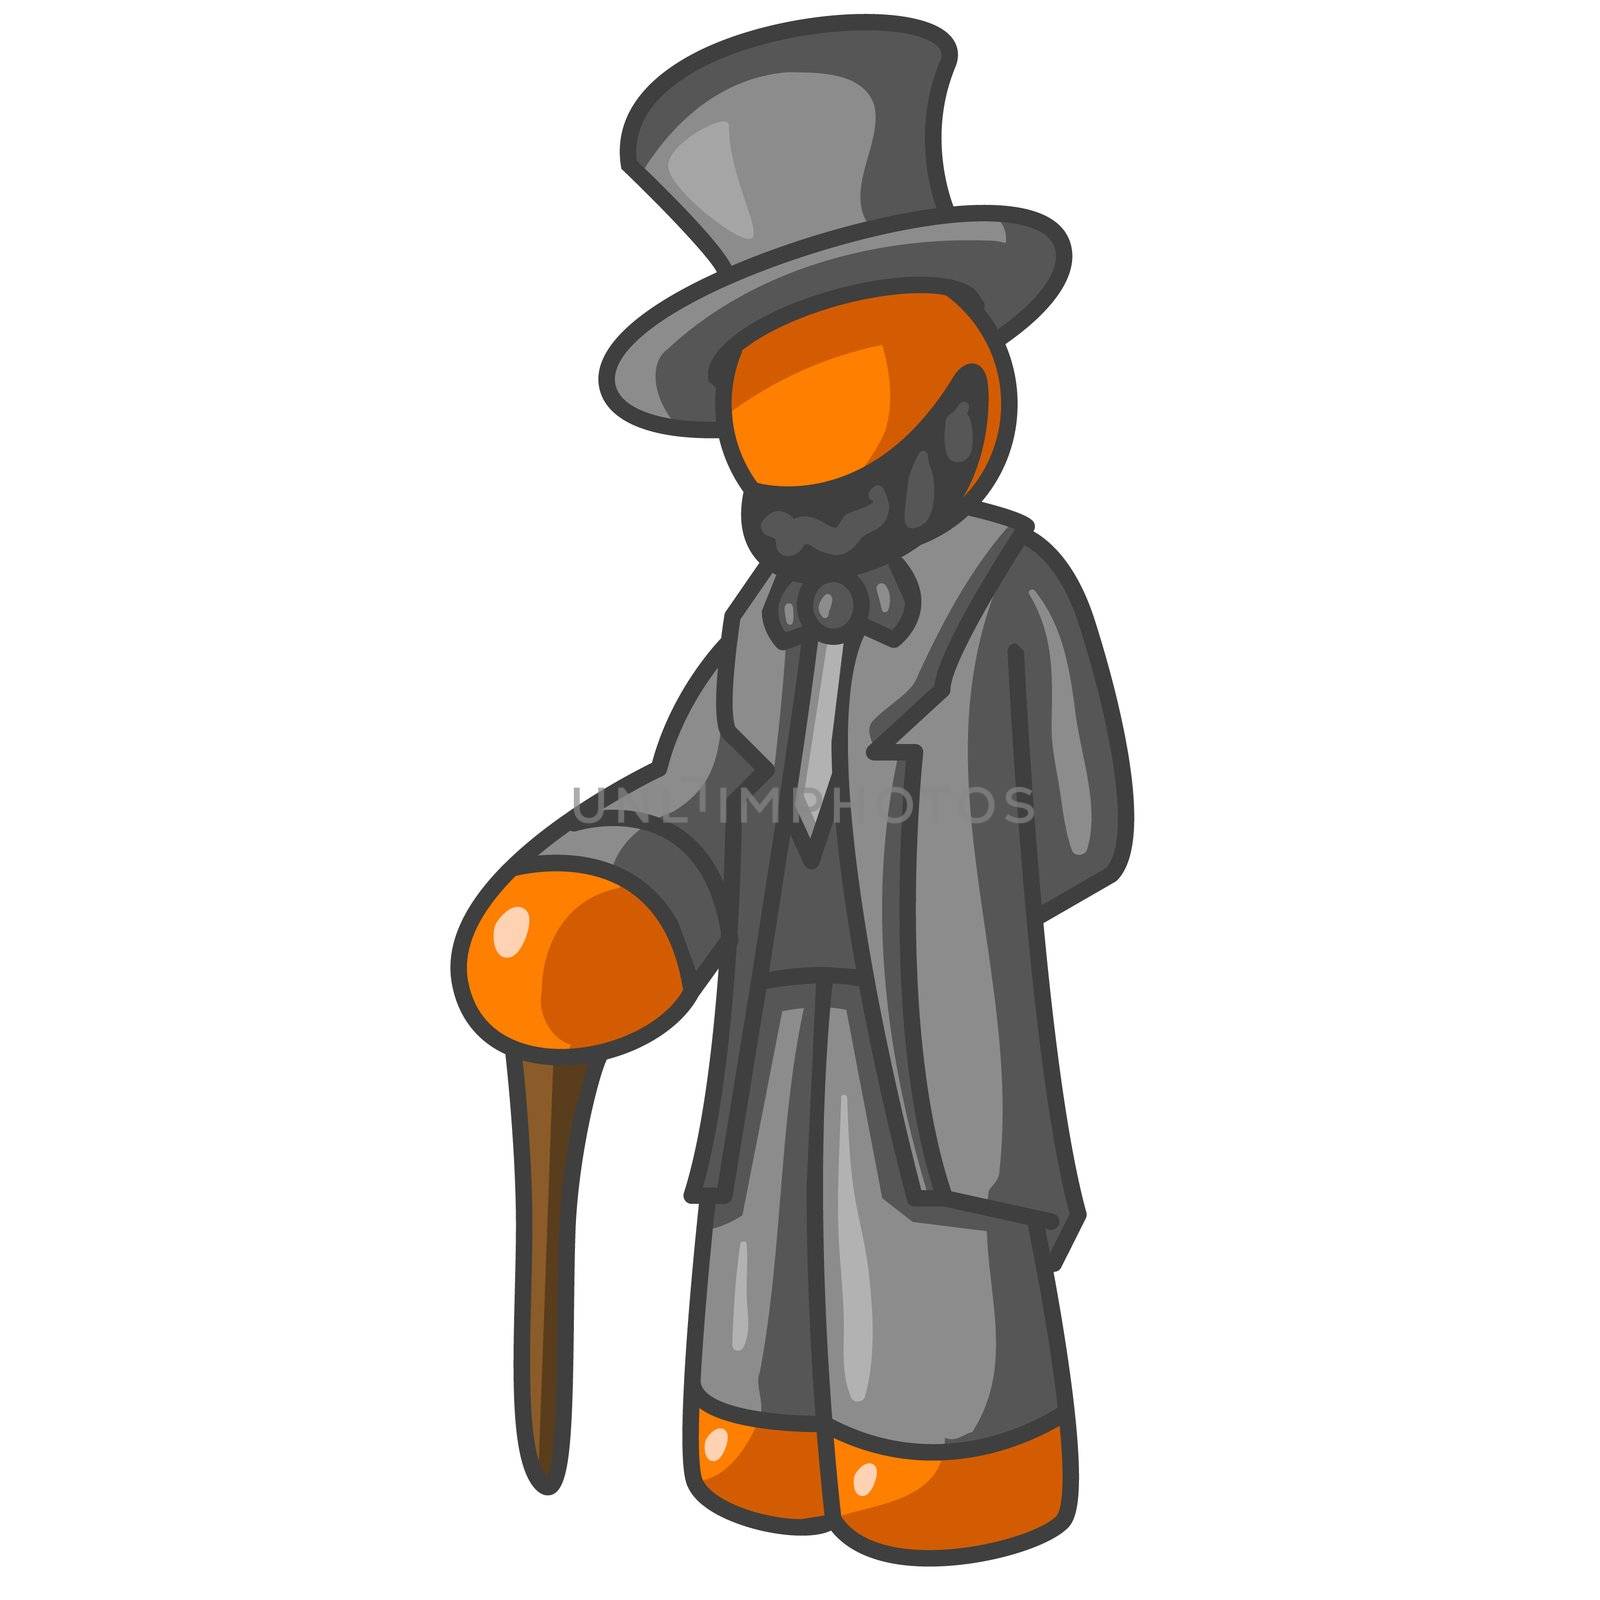 An orange man dressed as president Abraham Lincoln. 